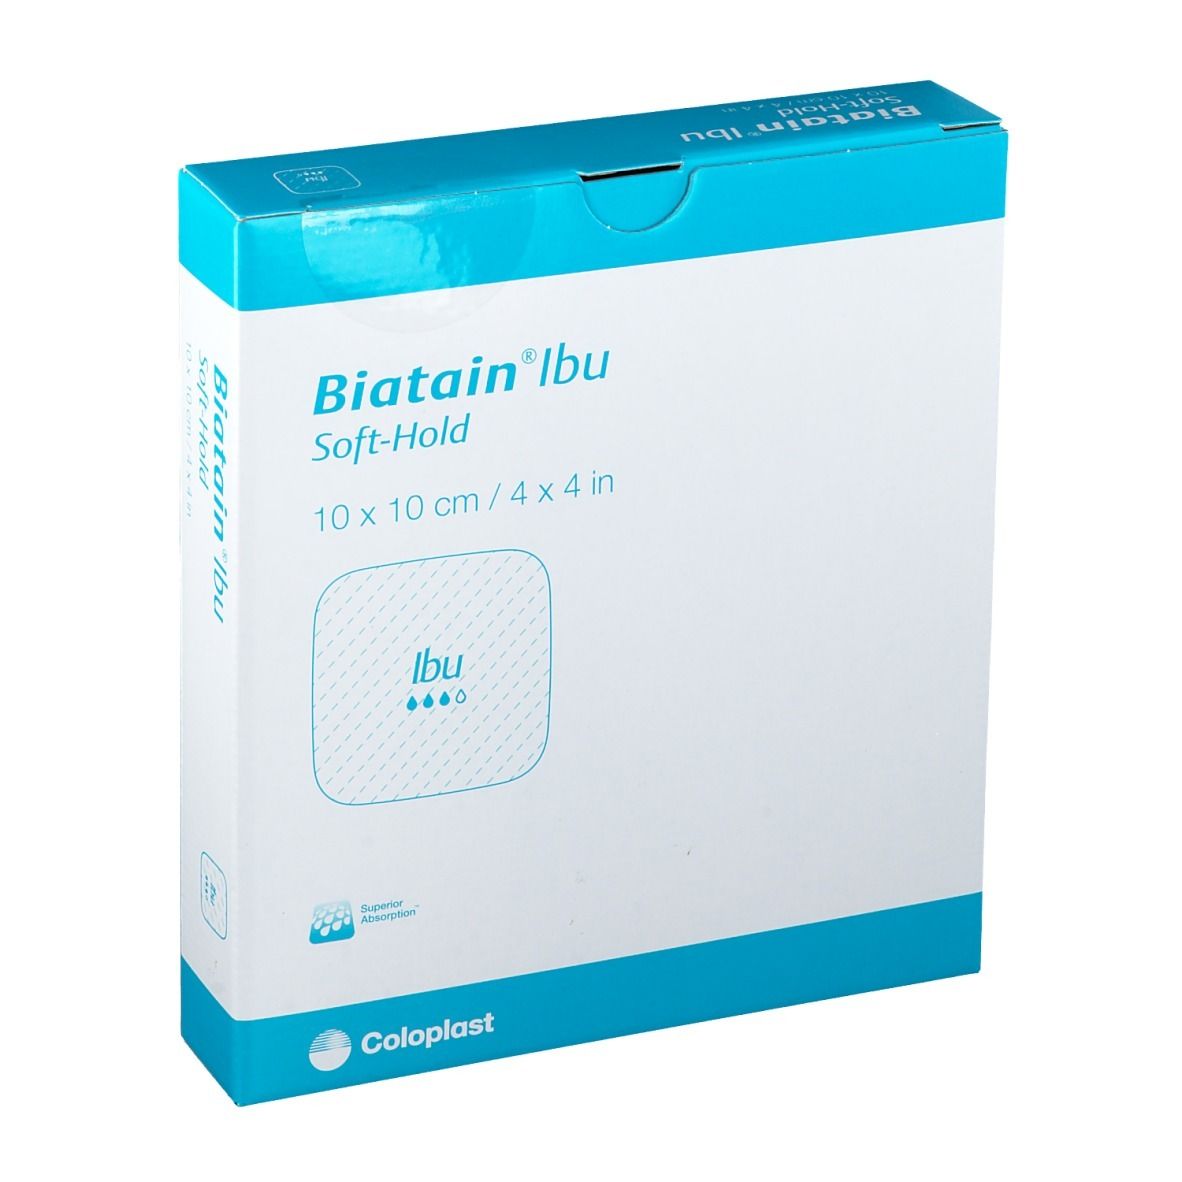 Coloplast Biatain® Ibu Soft-Hold 10 cm x 10 cm